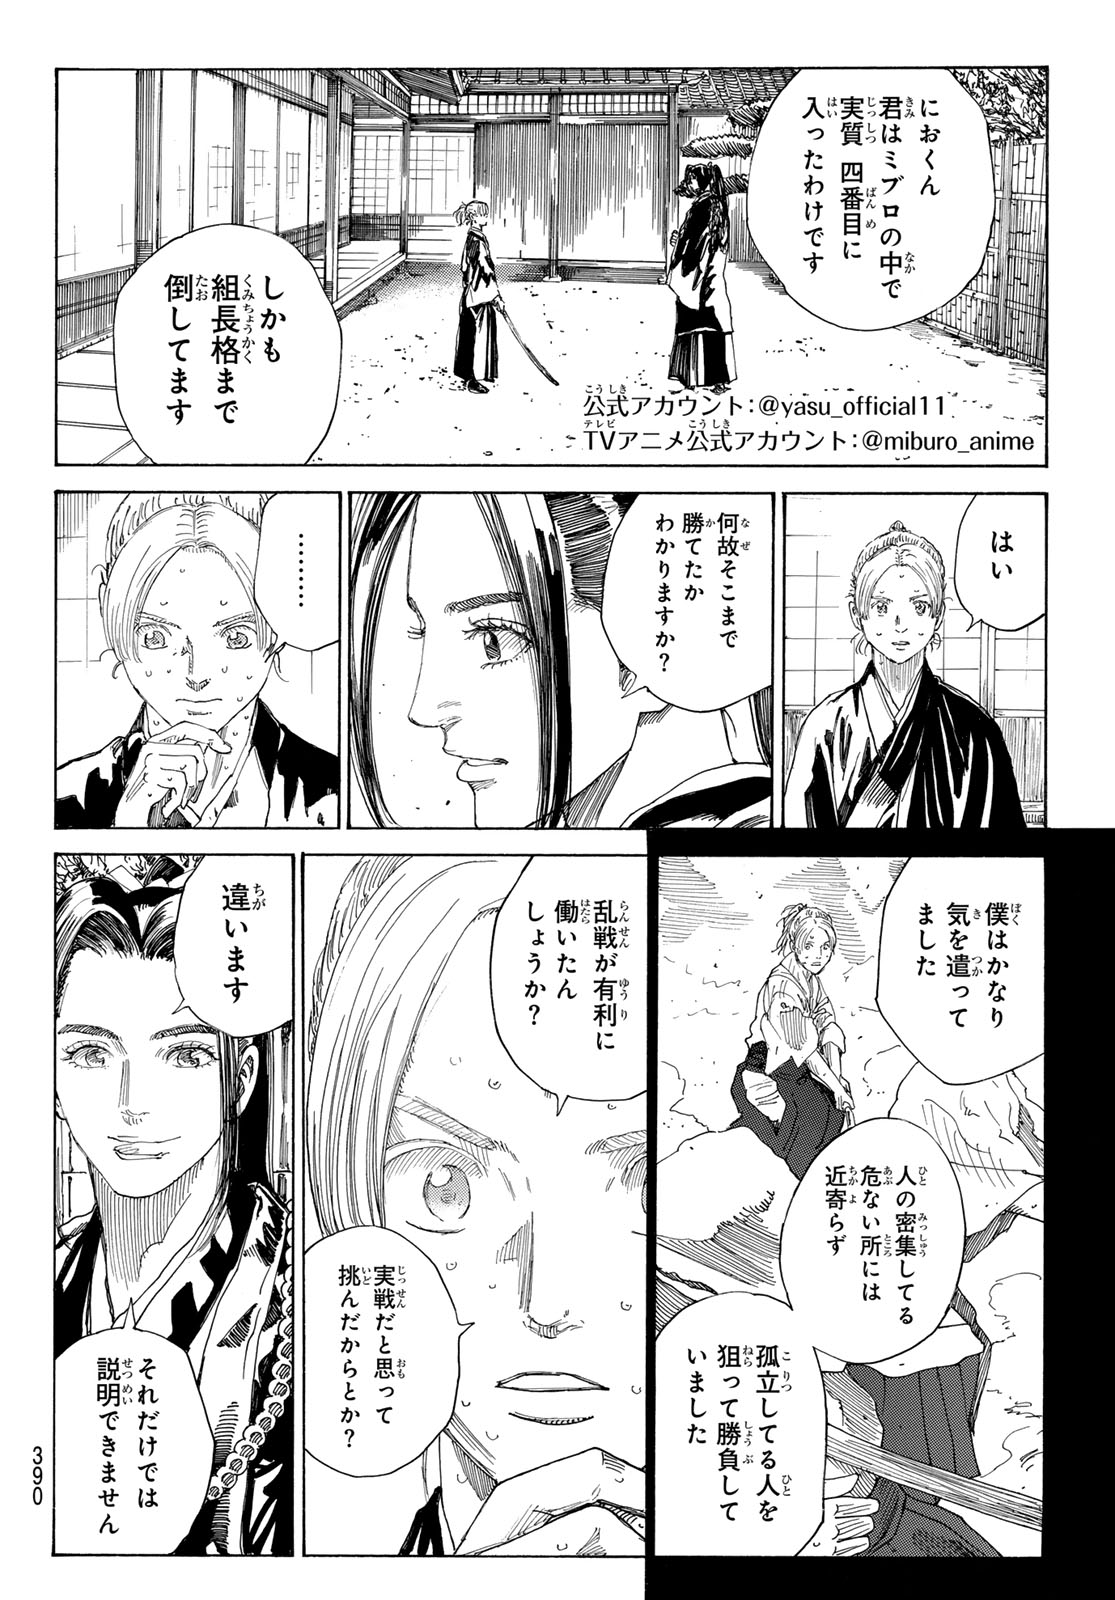 Ao no Miburo - Chapter 129 - Page 2